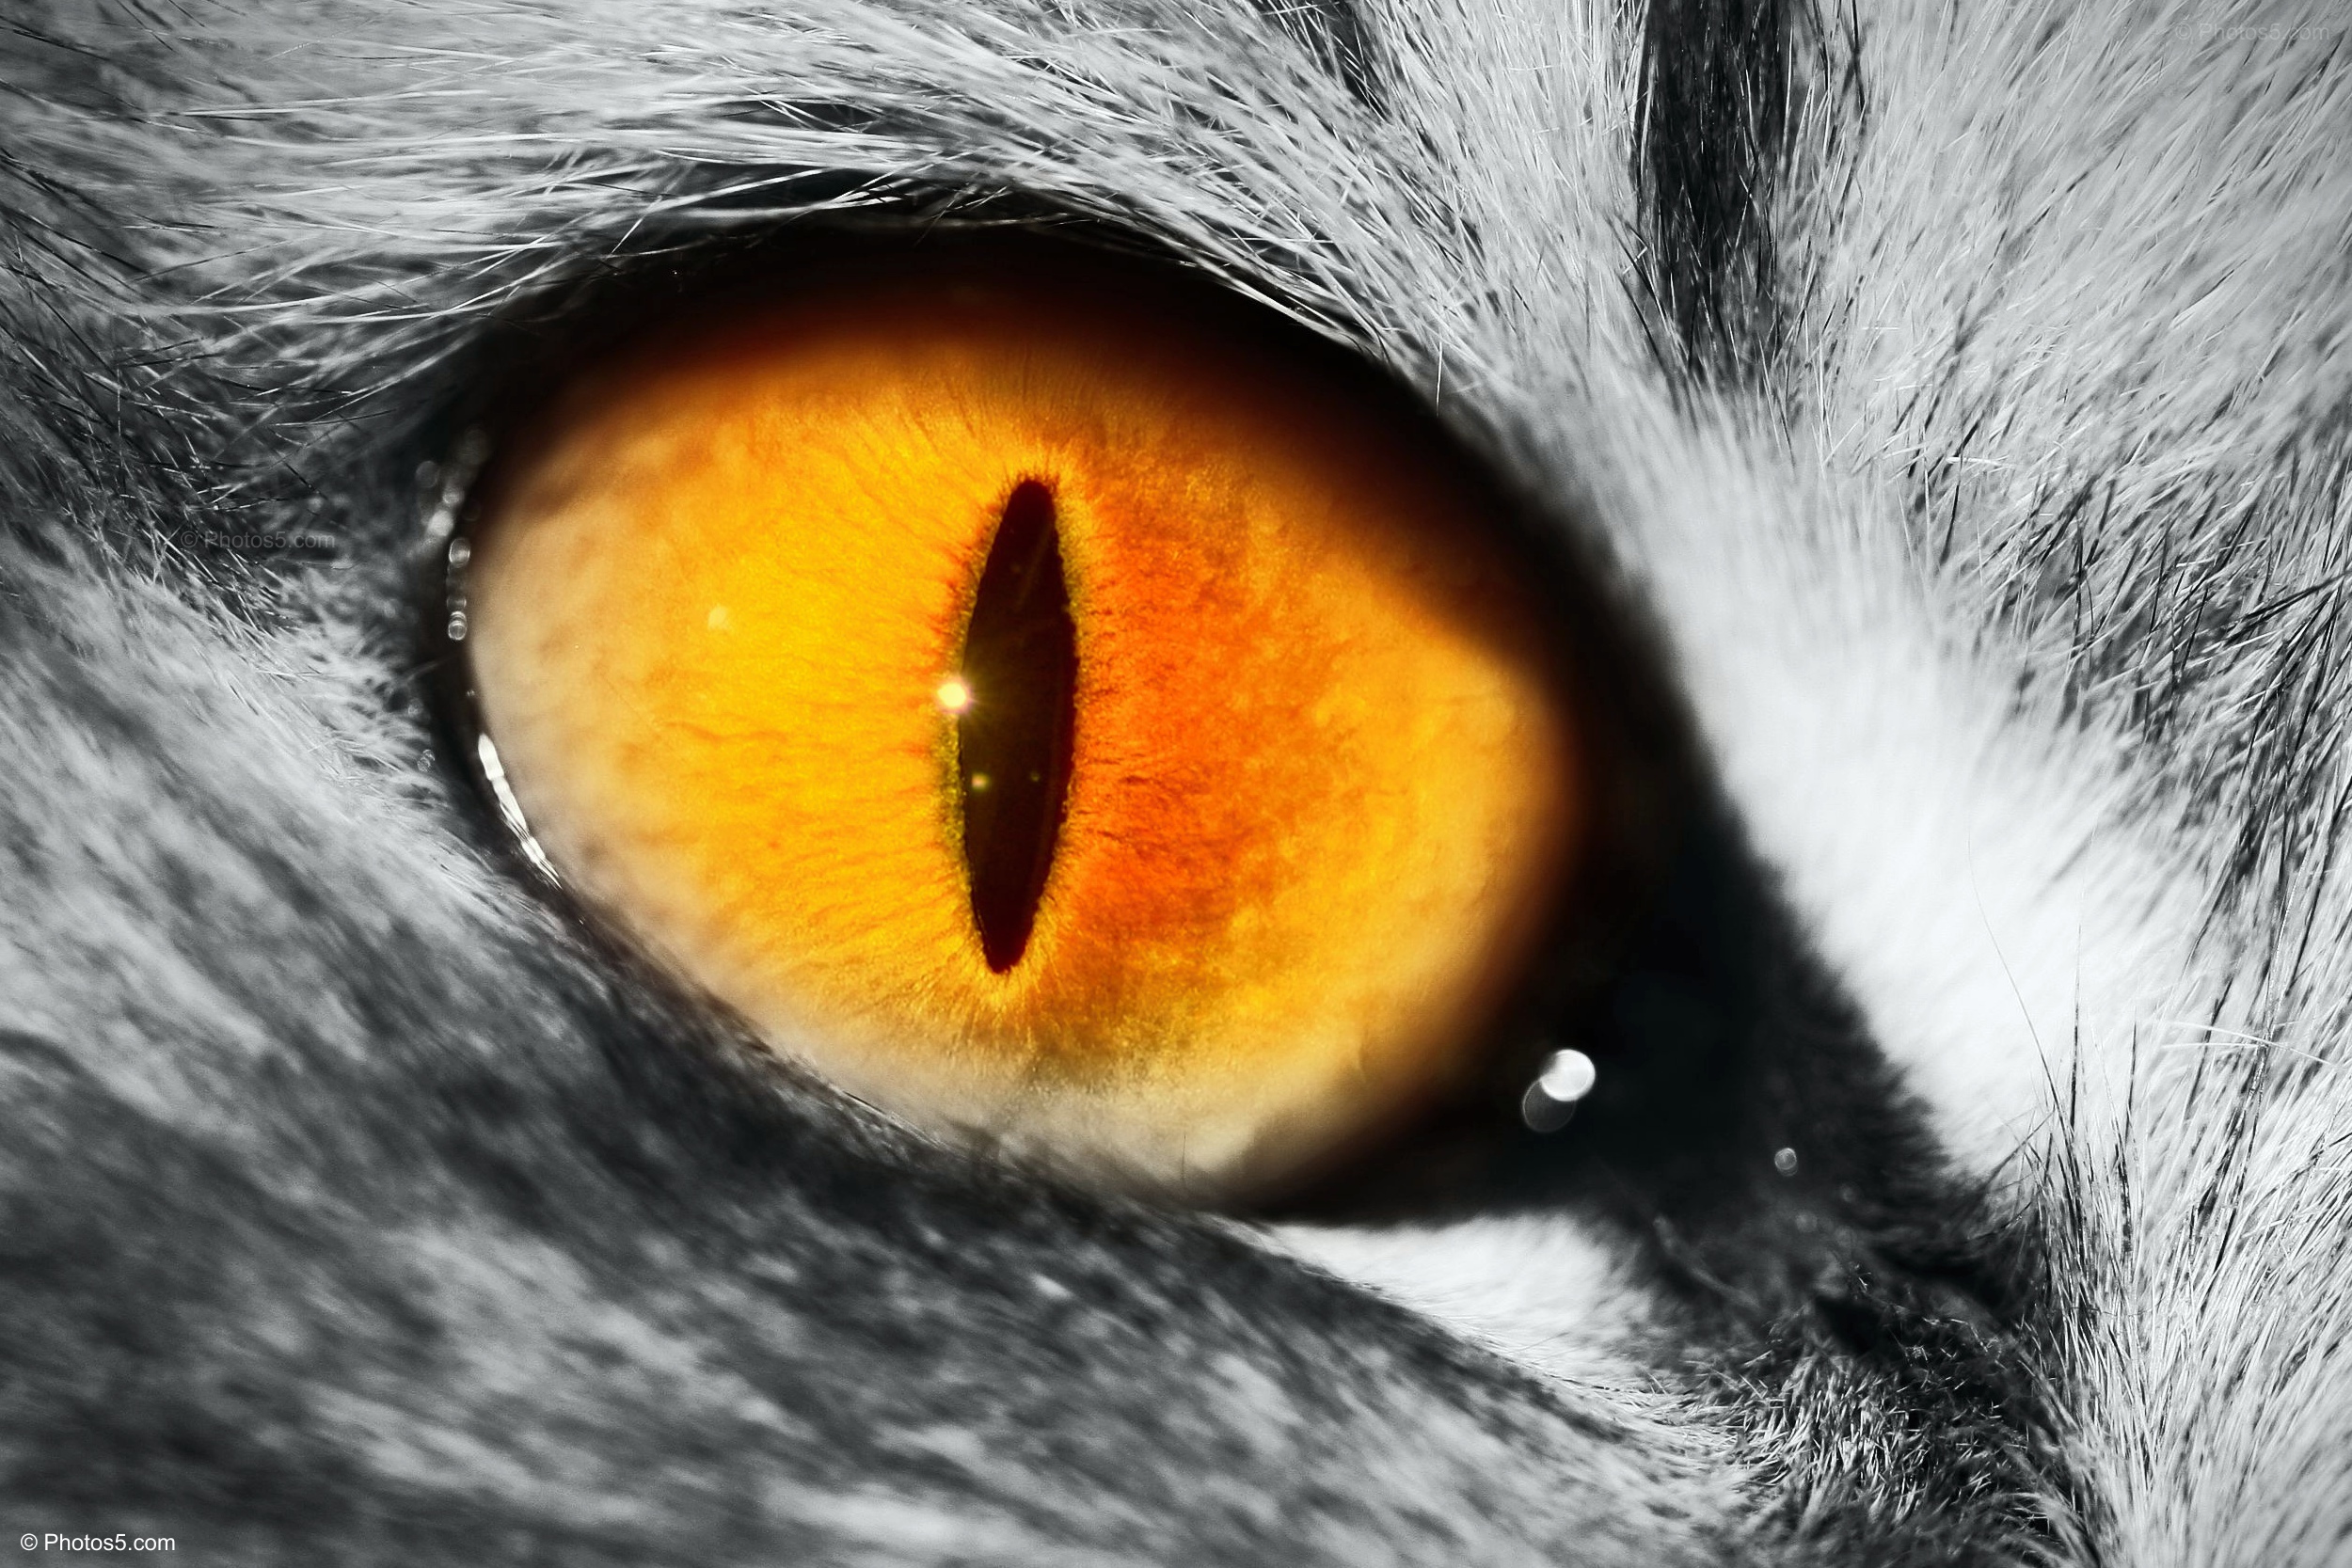 Macro of Cat Eye – Photos5.com